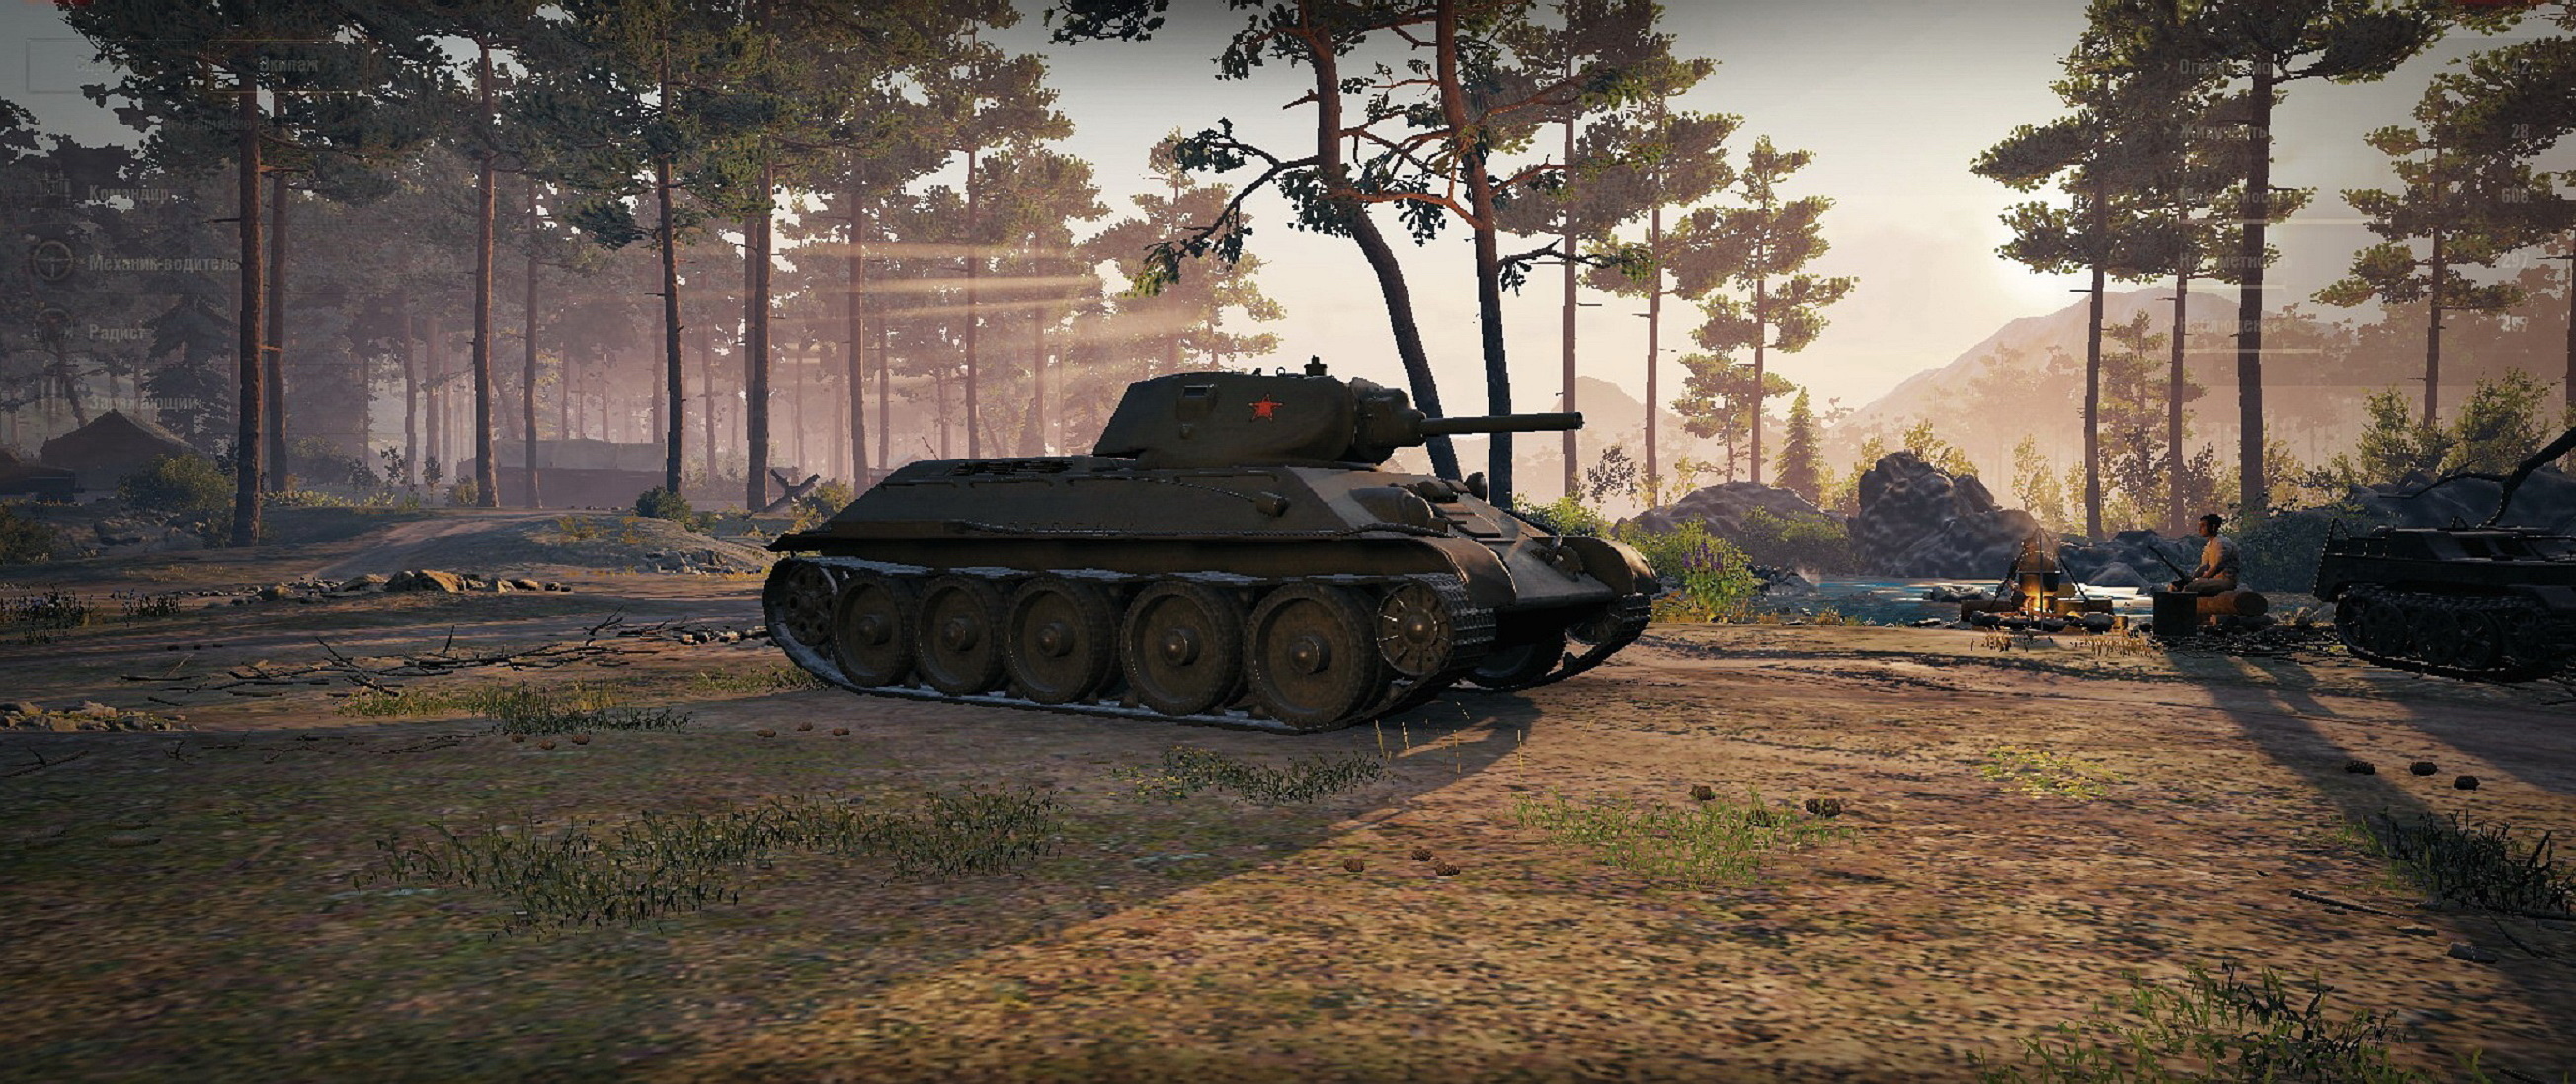 Т 34 блиц. Танк т-34 ворлд оф танк. Танк т34 WOT. Т 34 76 ворлд оф танк. Т-34 танк СССР World of Tanks.